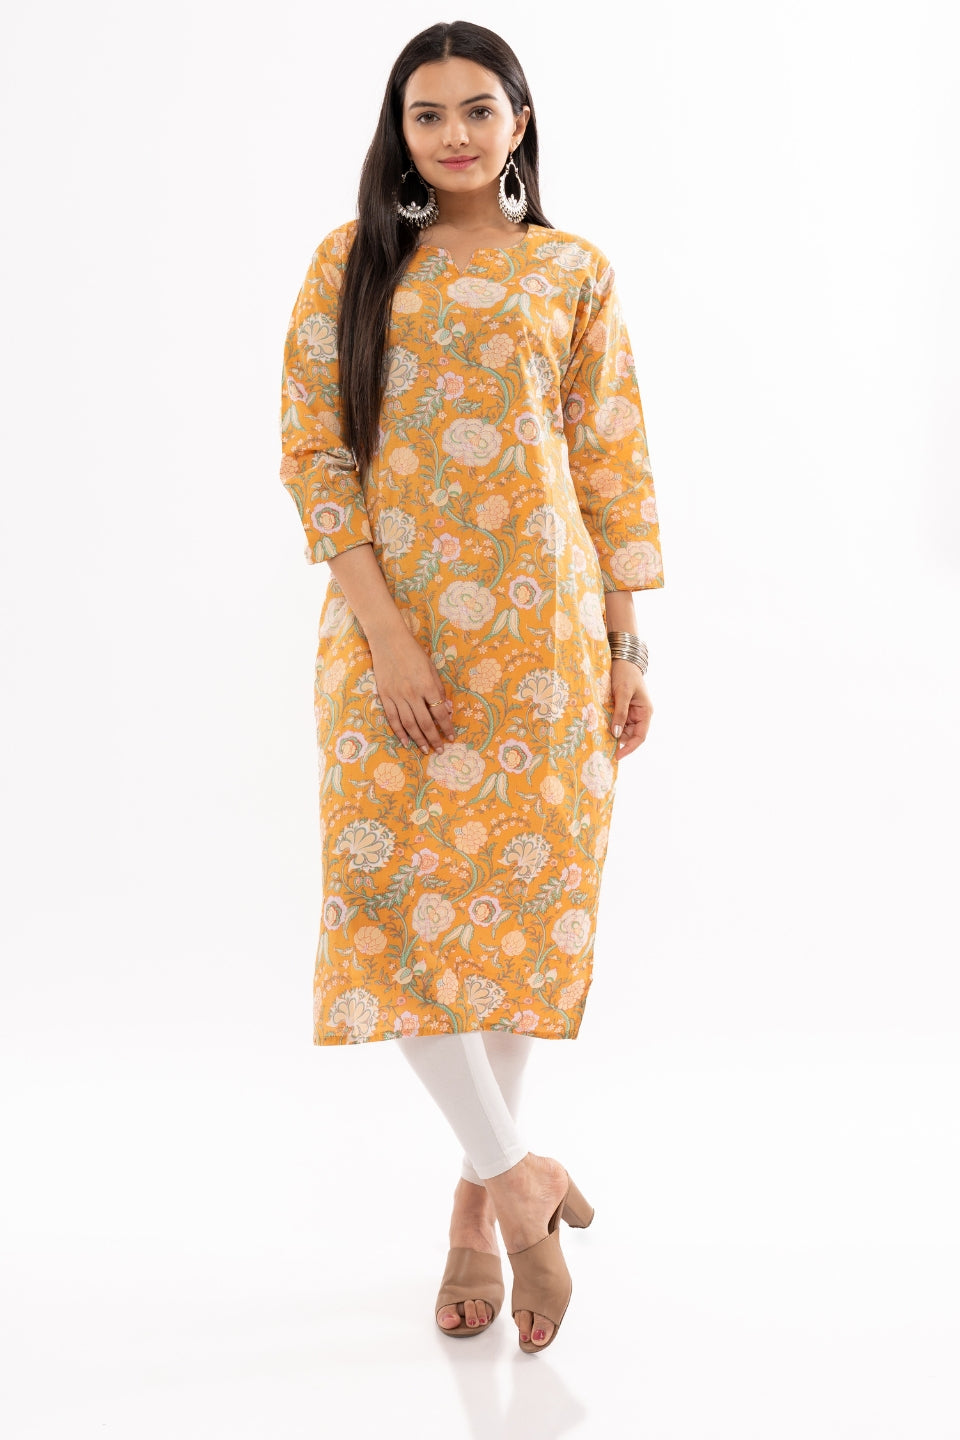 Ekisha women's cotton yellow printed straight floral kurta kurti round neck, front view